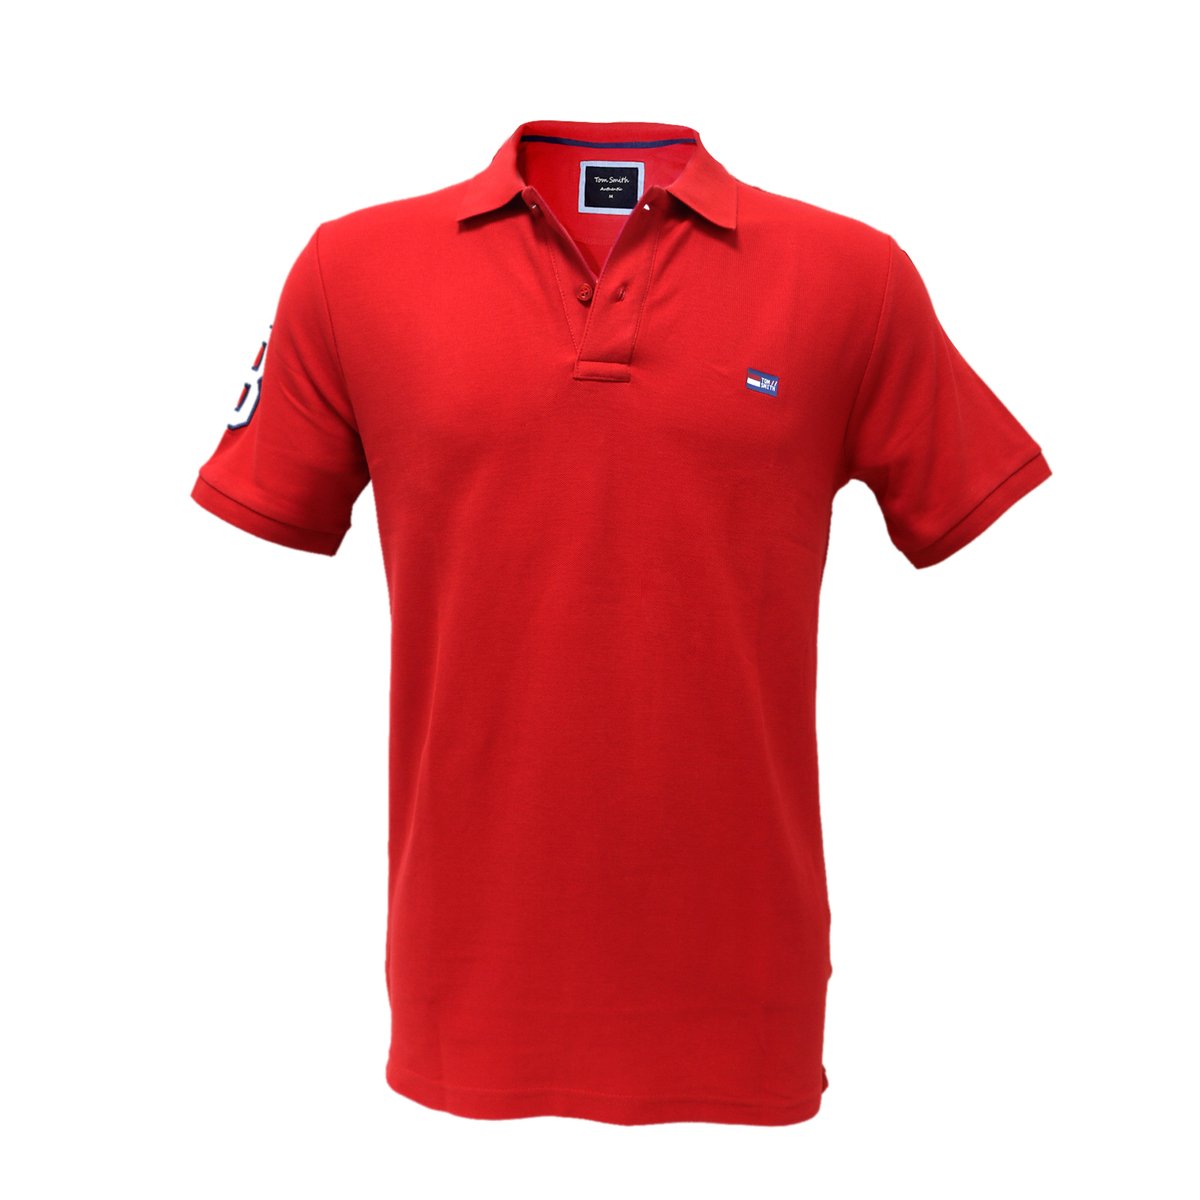 Tom Smith Polo T-Shirt True Red - XL